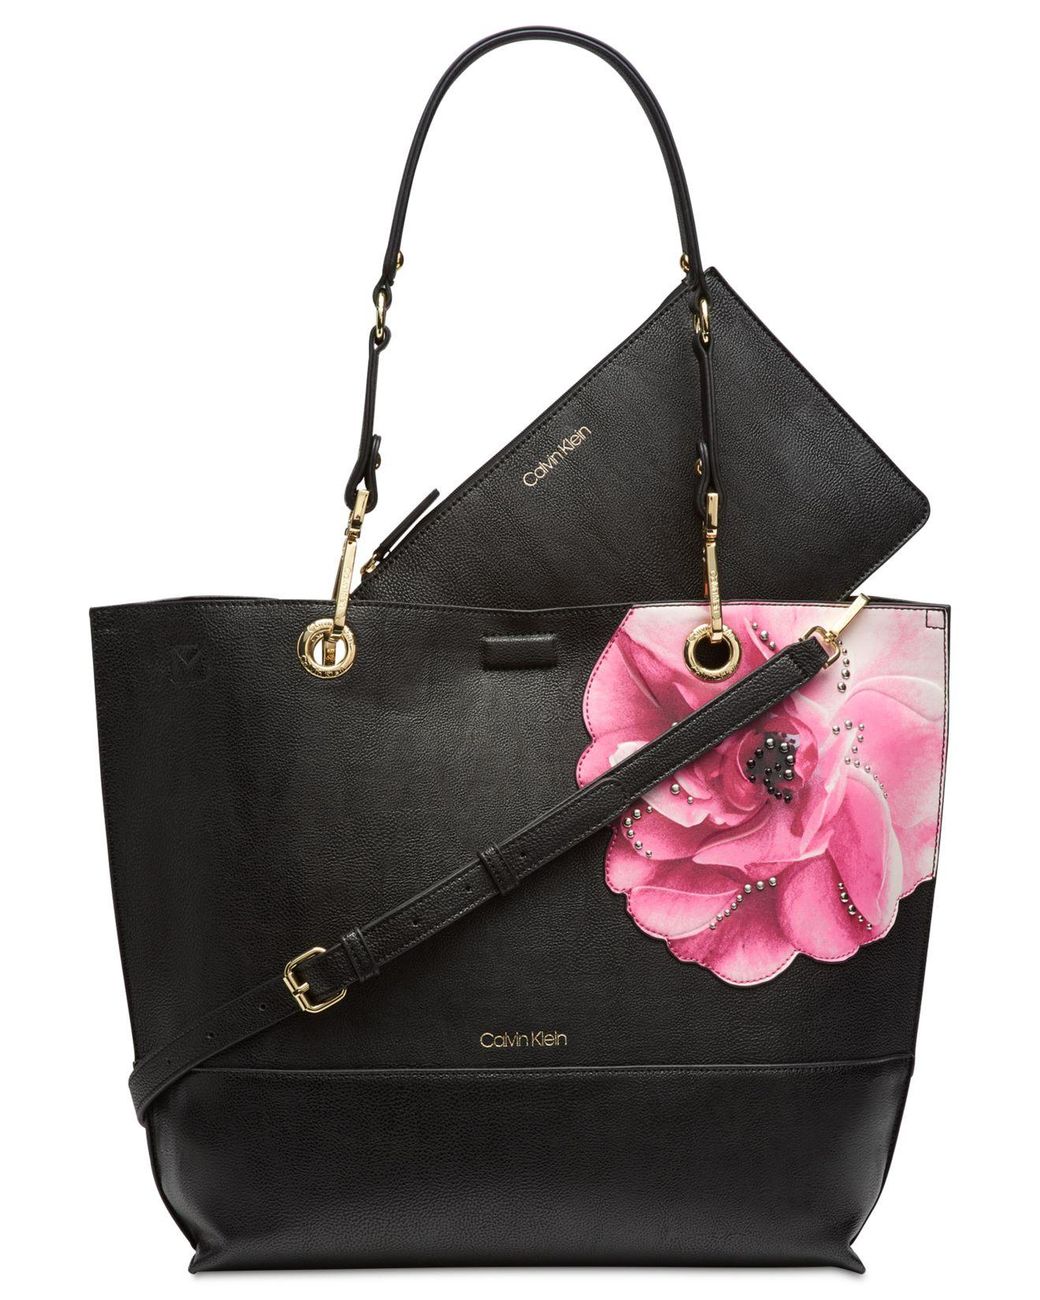 Descubrir 46+ imagen calvin klein black purse with flowers